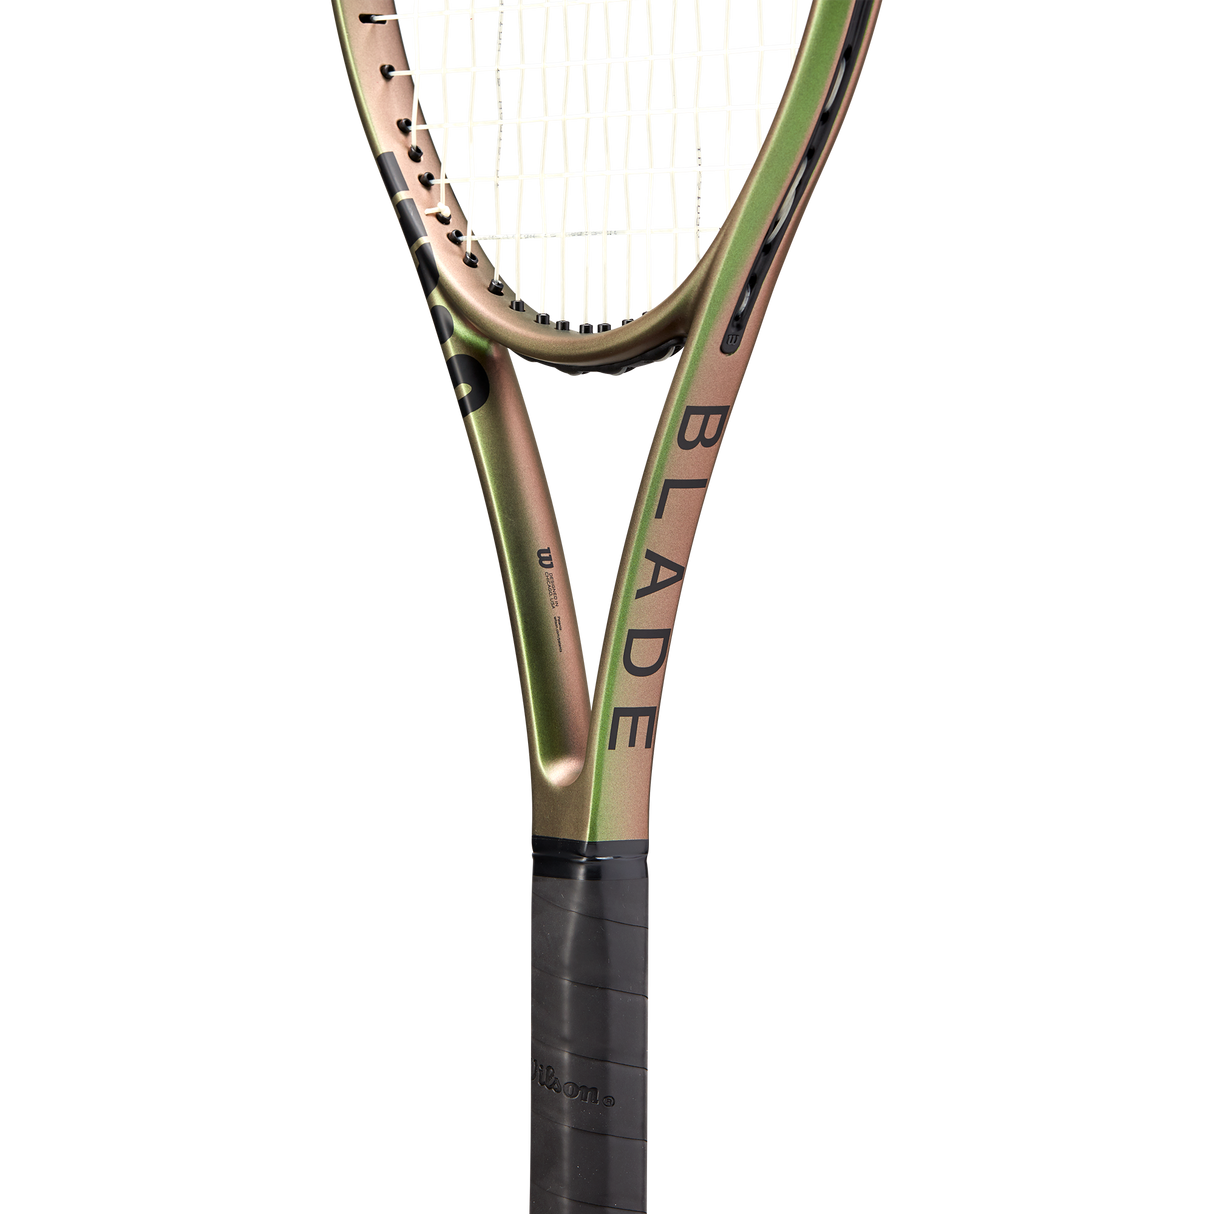 Wilson Blade 104 Tennis Racket V8.0 (Unstrung)